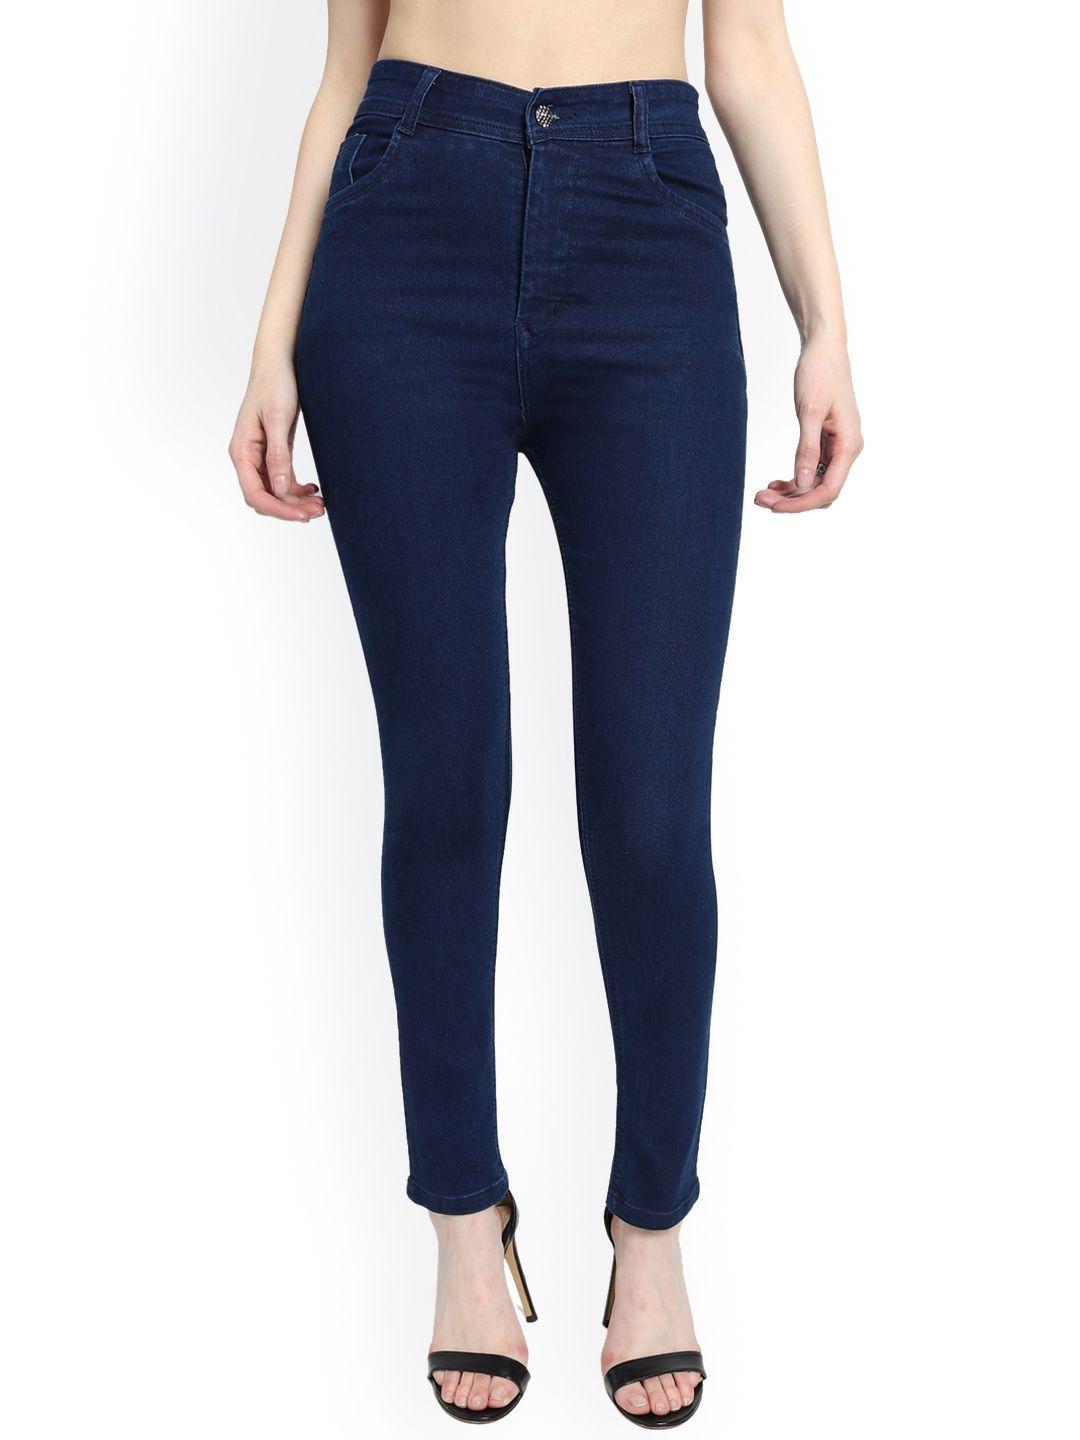 baesd women jean slim fit stretchable denim jeans